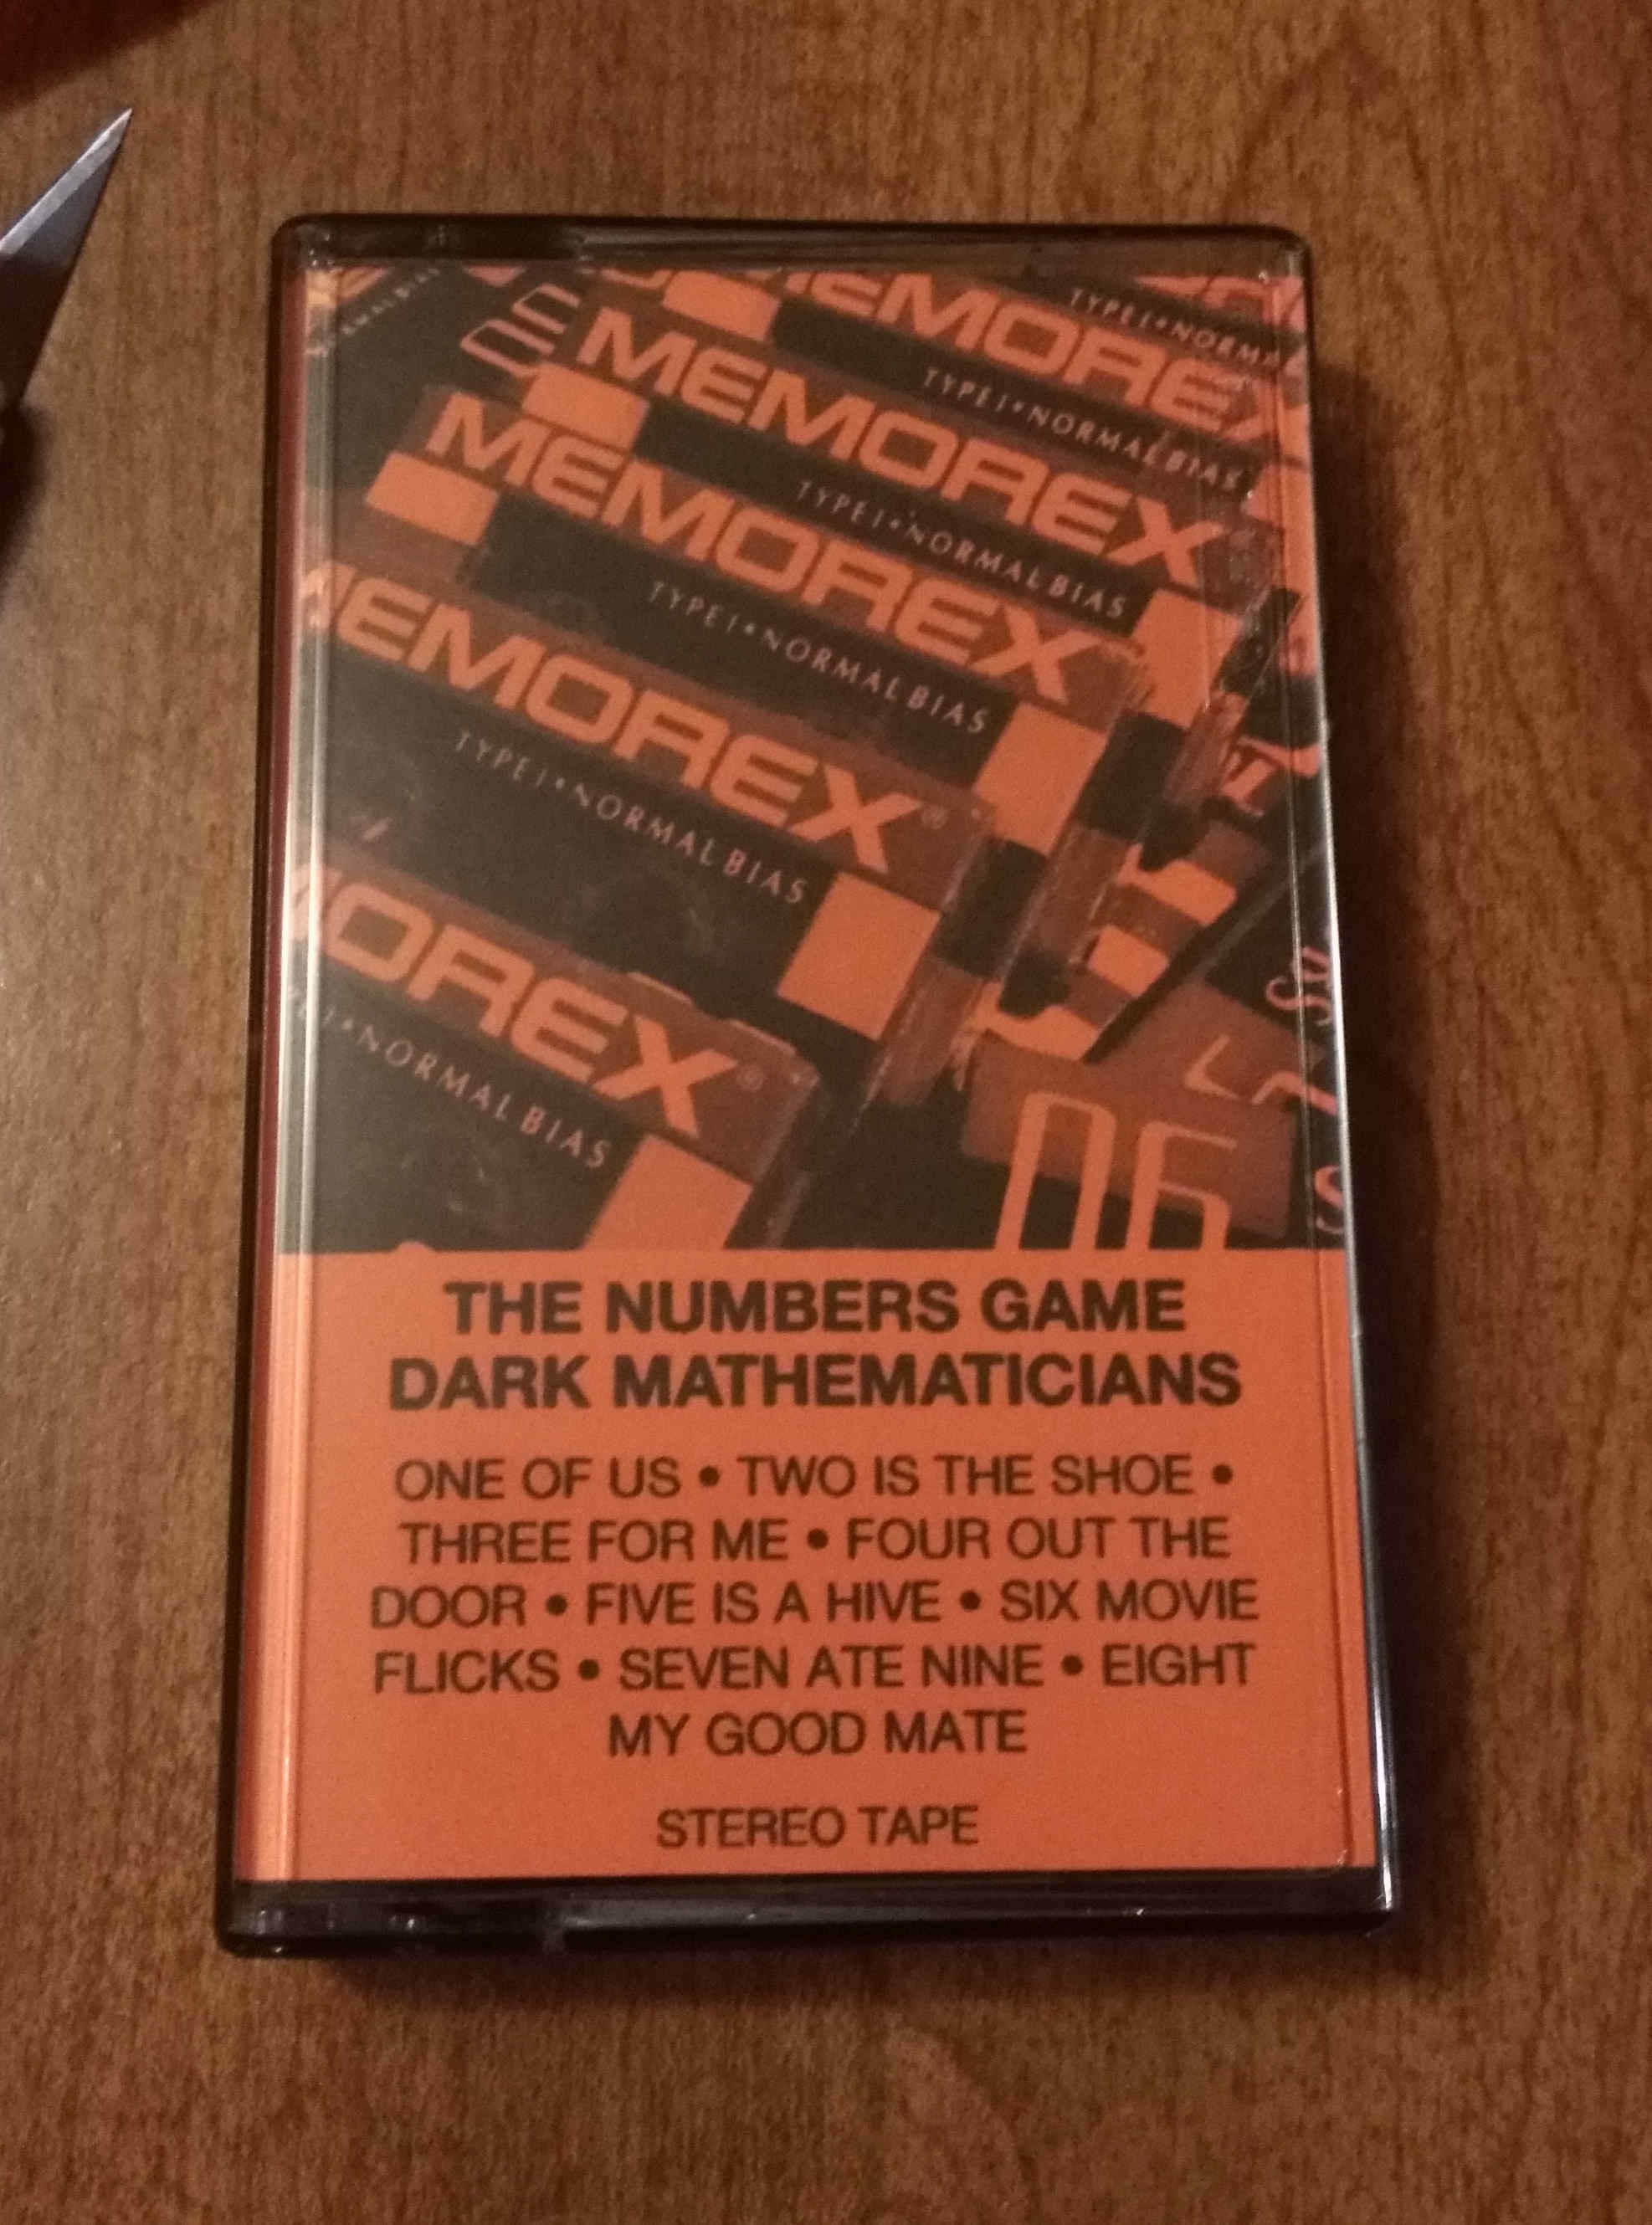 J-card inside a cassette tape case